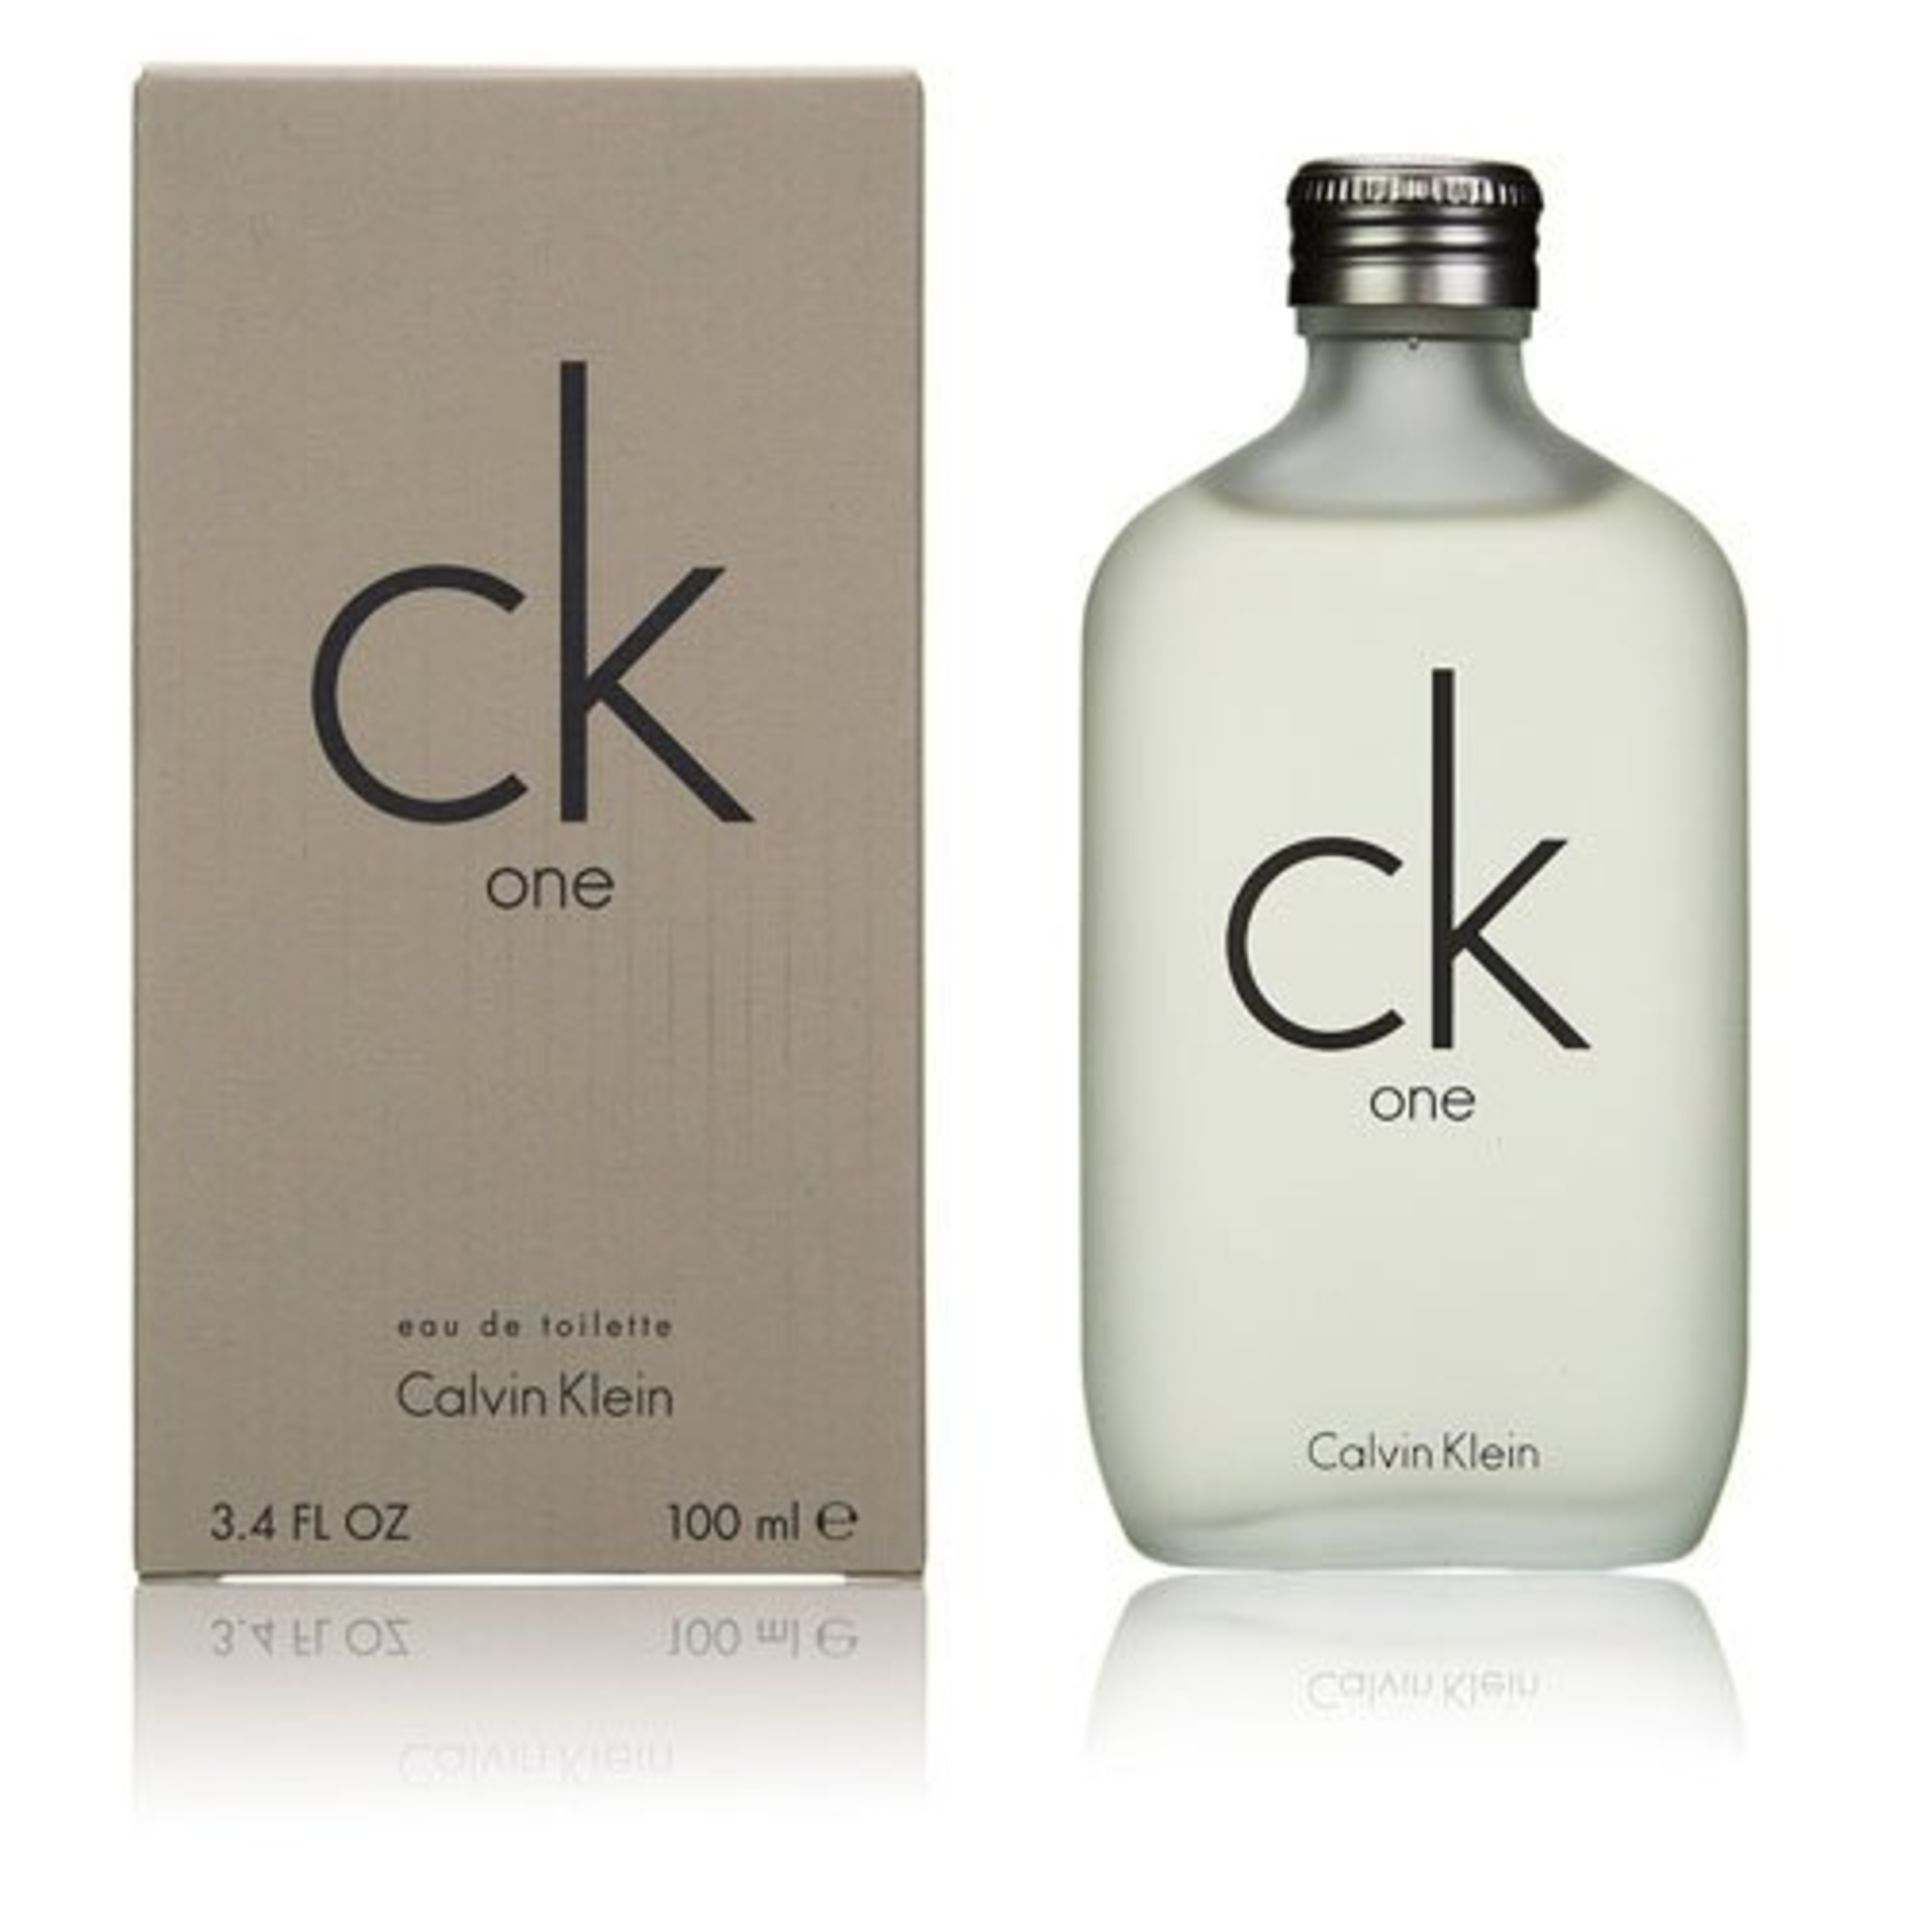 V Brand New Calvin Klein CK One 100ml EDT Spray